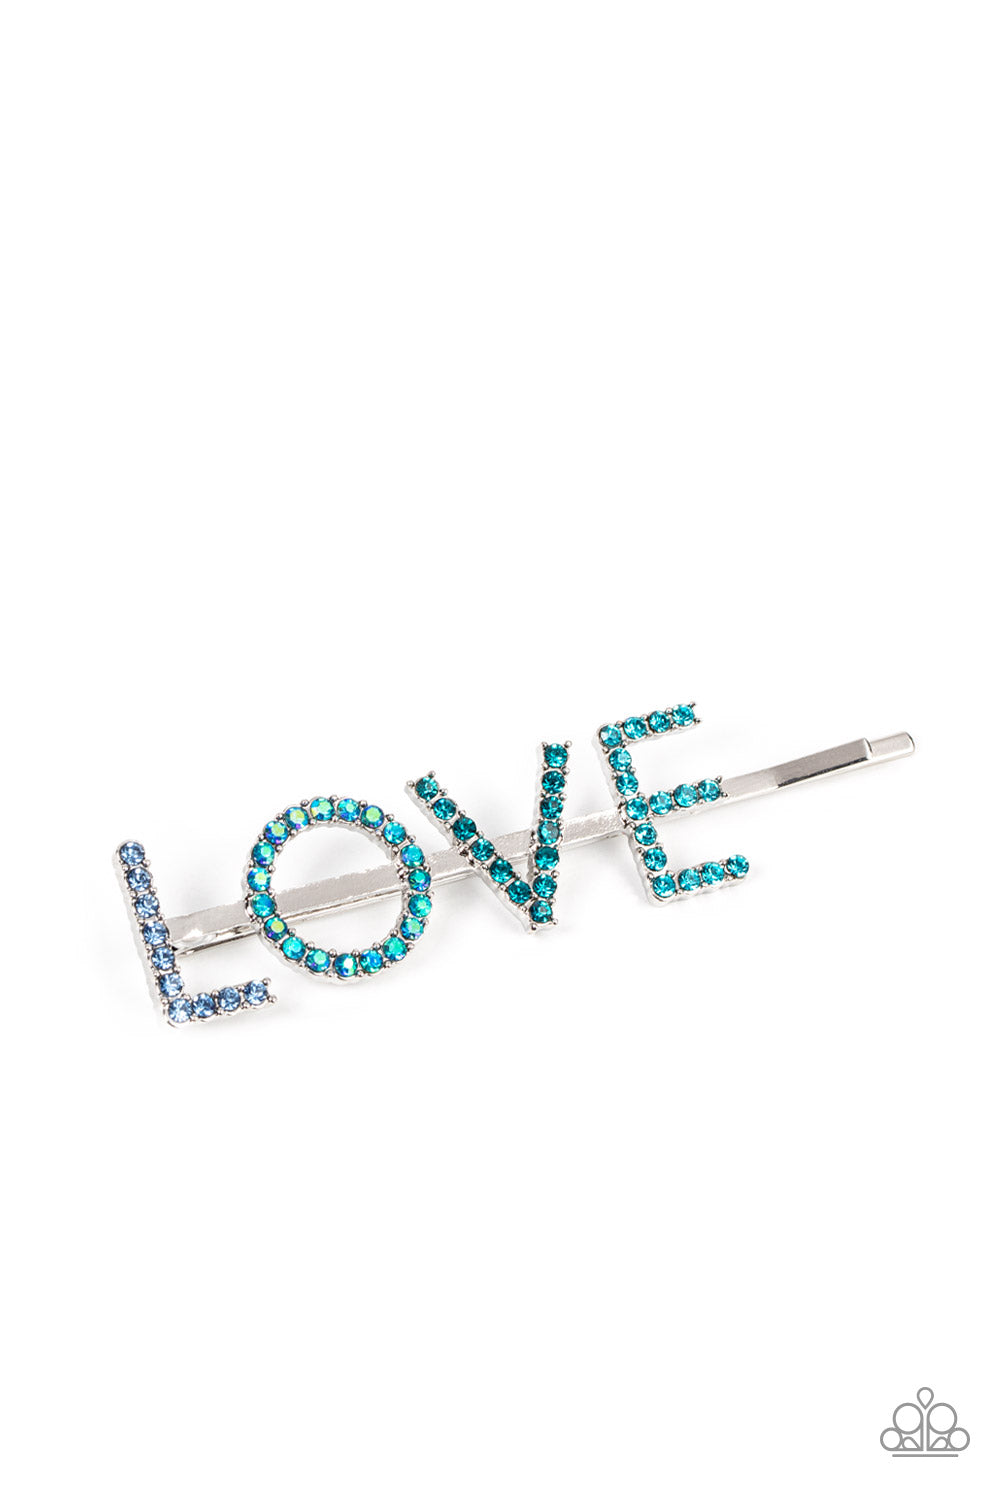 True Love Twinkle - Blue Hair Accessories - Paparazzi Accessories - Alies Bling Bar